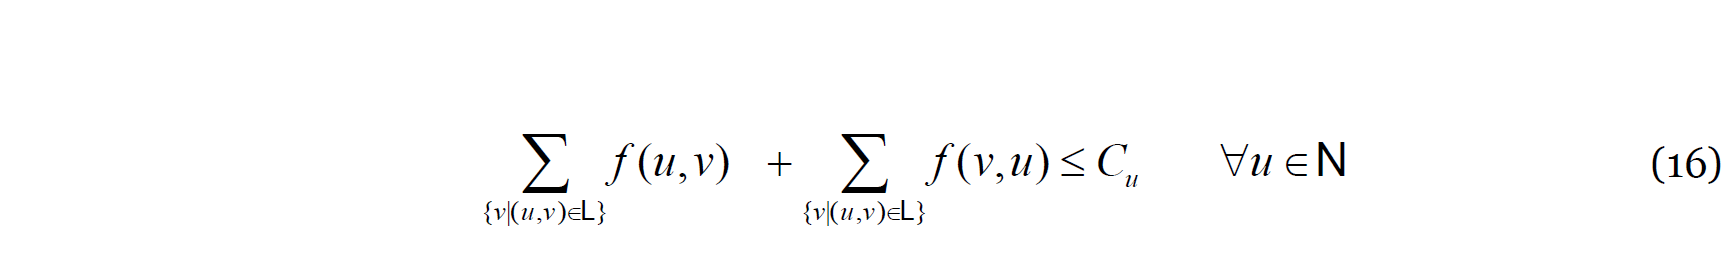 Constraint equation